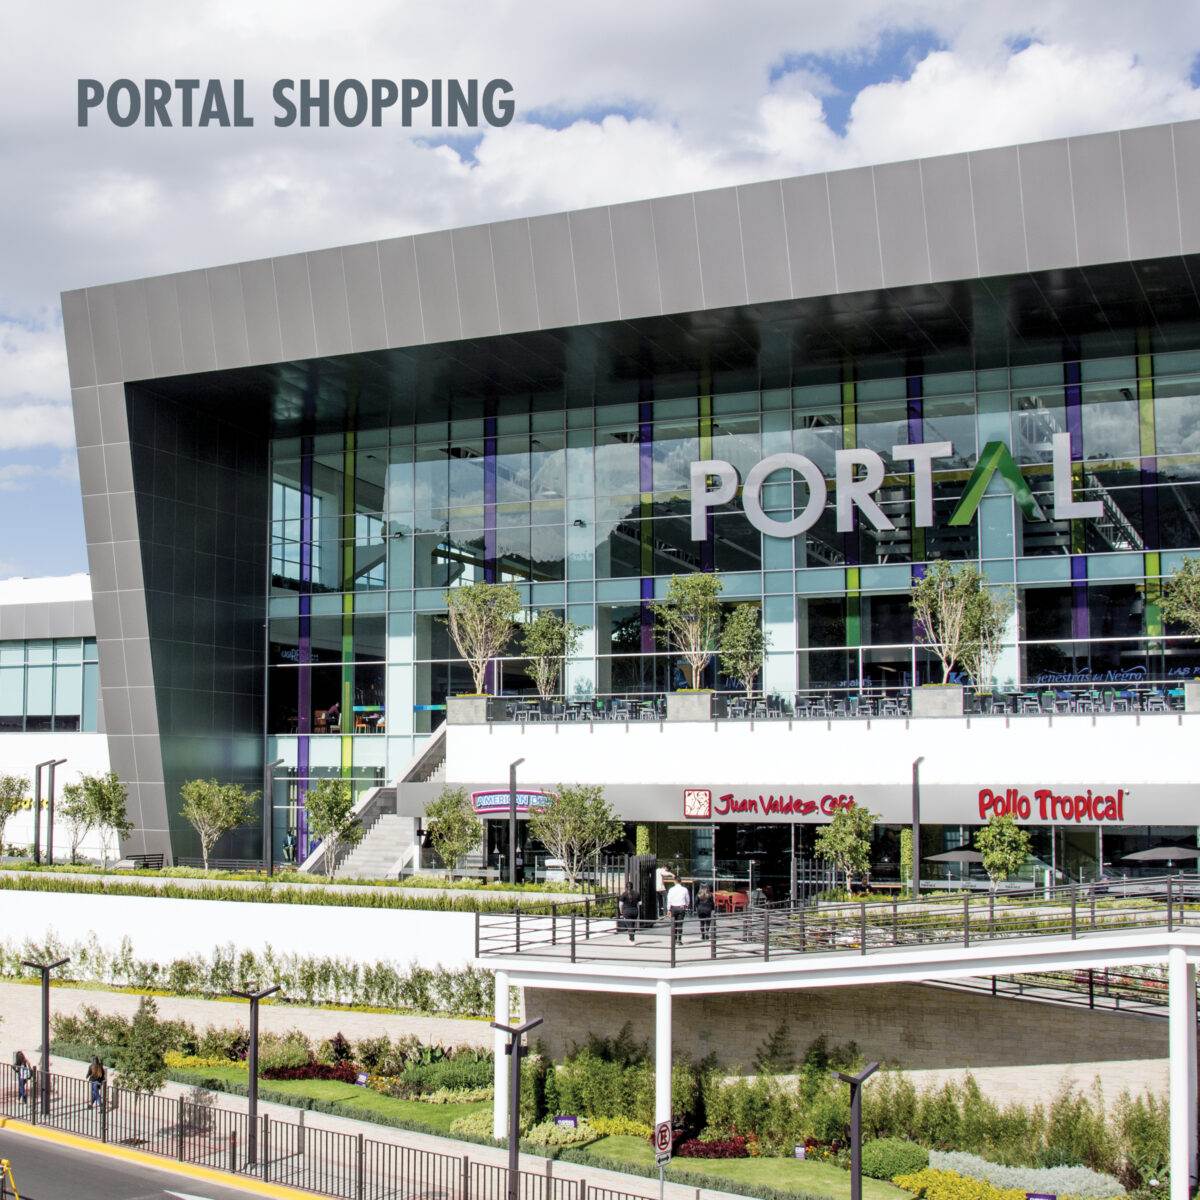 Portal Shopping architect